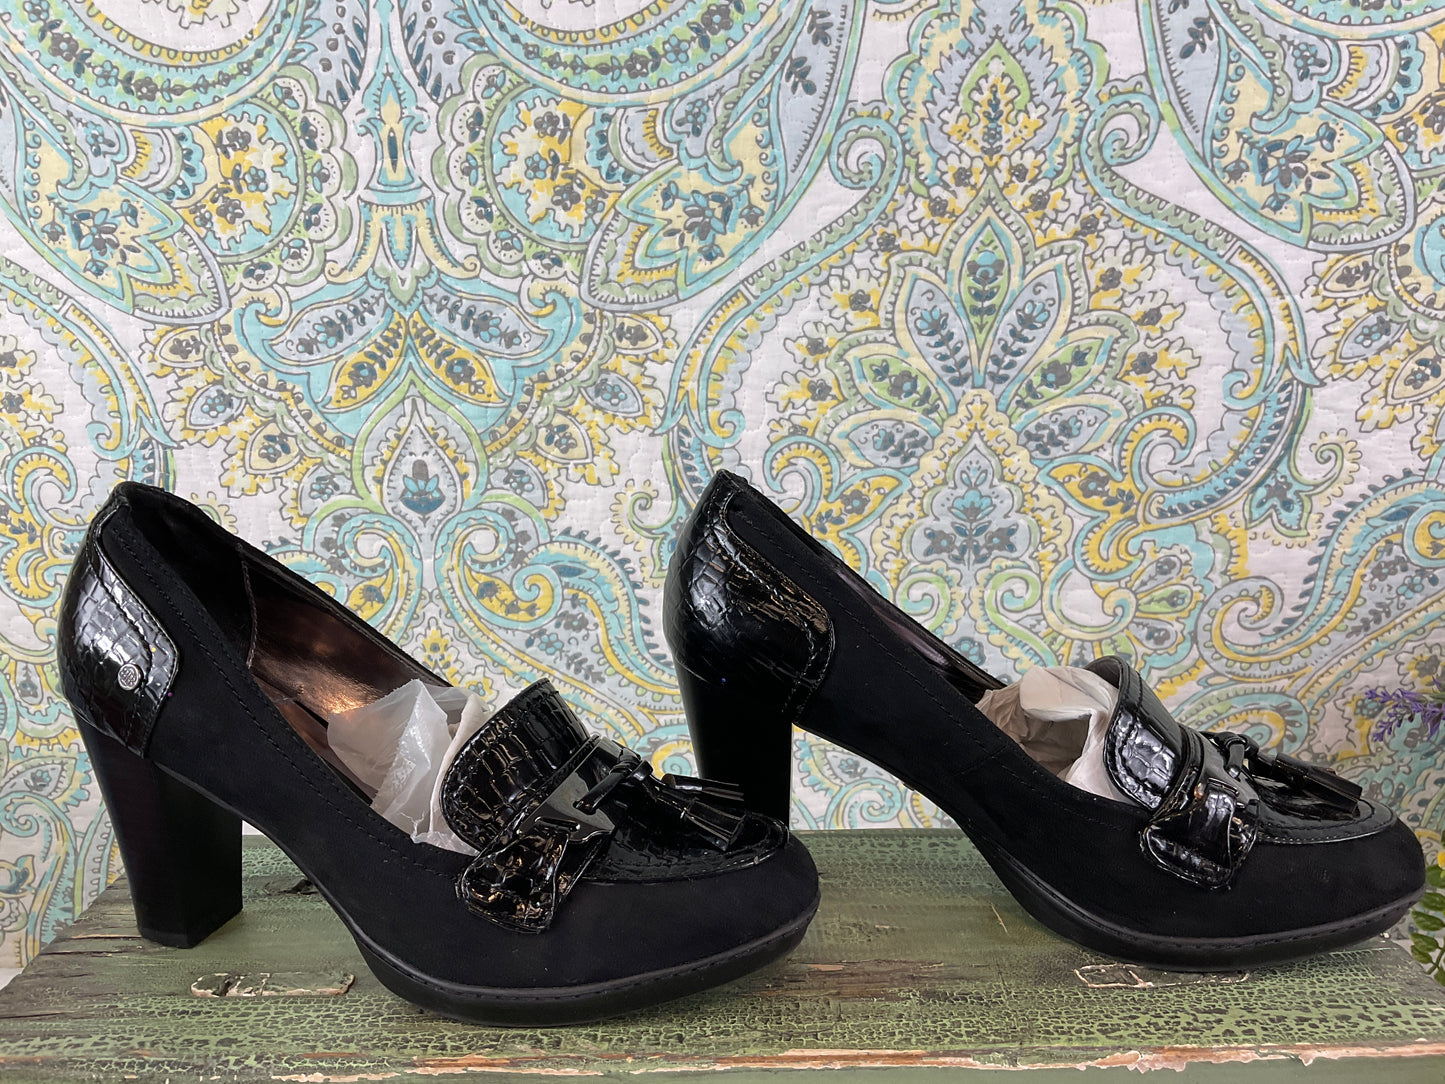 Dana Buchman Suede & Leather Heels, Size 9.5 M